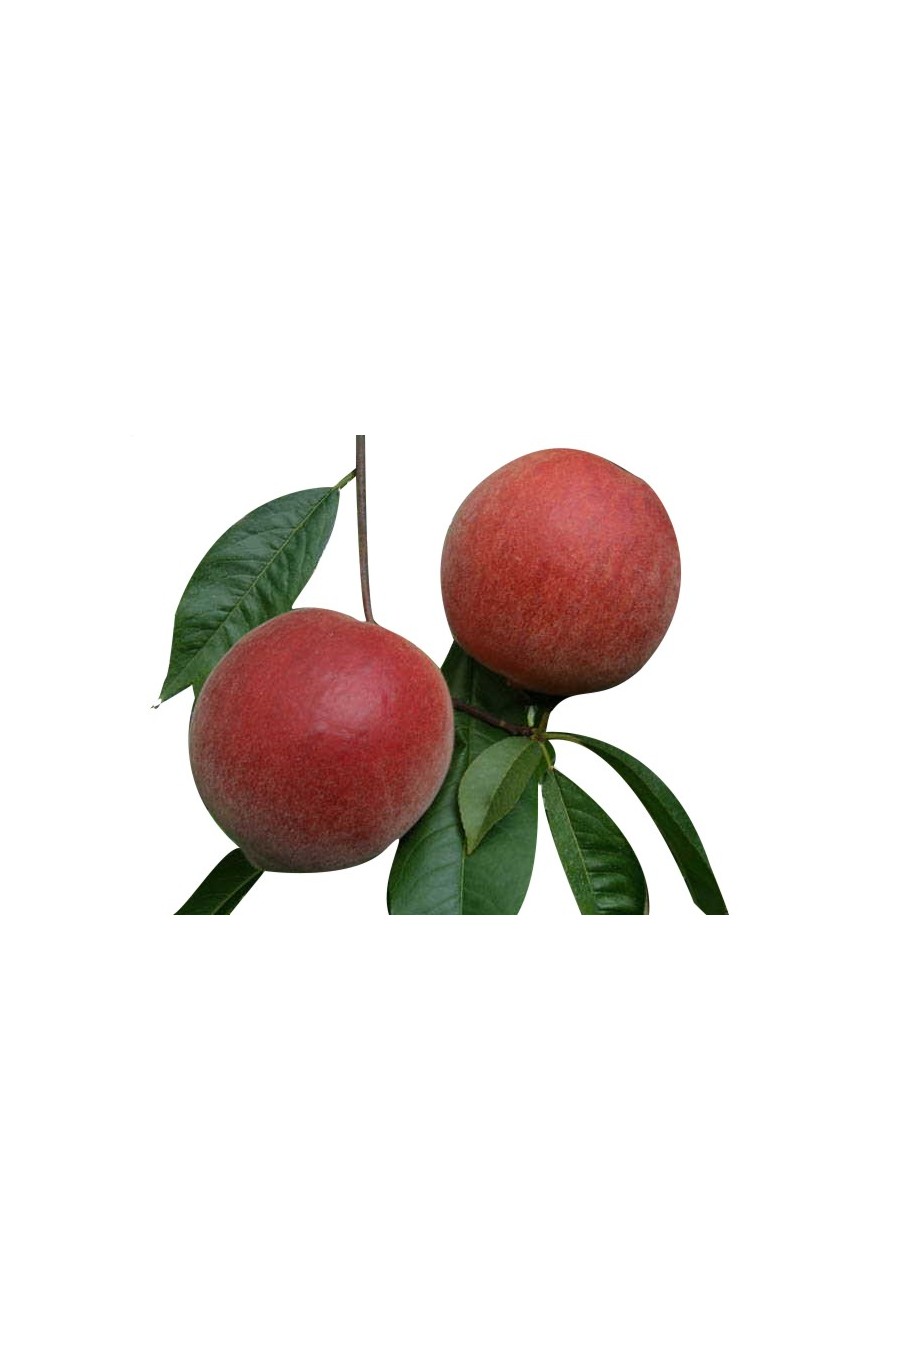 Albero da frutta Pesco Prunus persica DONUT Piante a radici nude